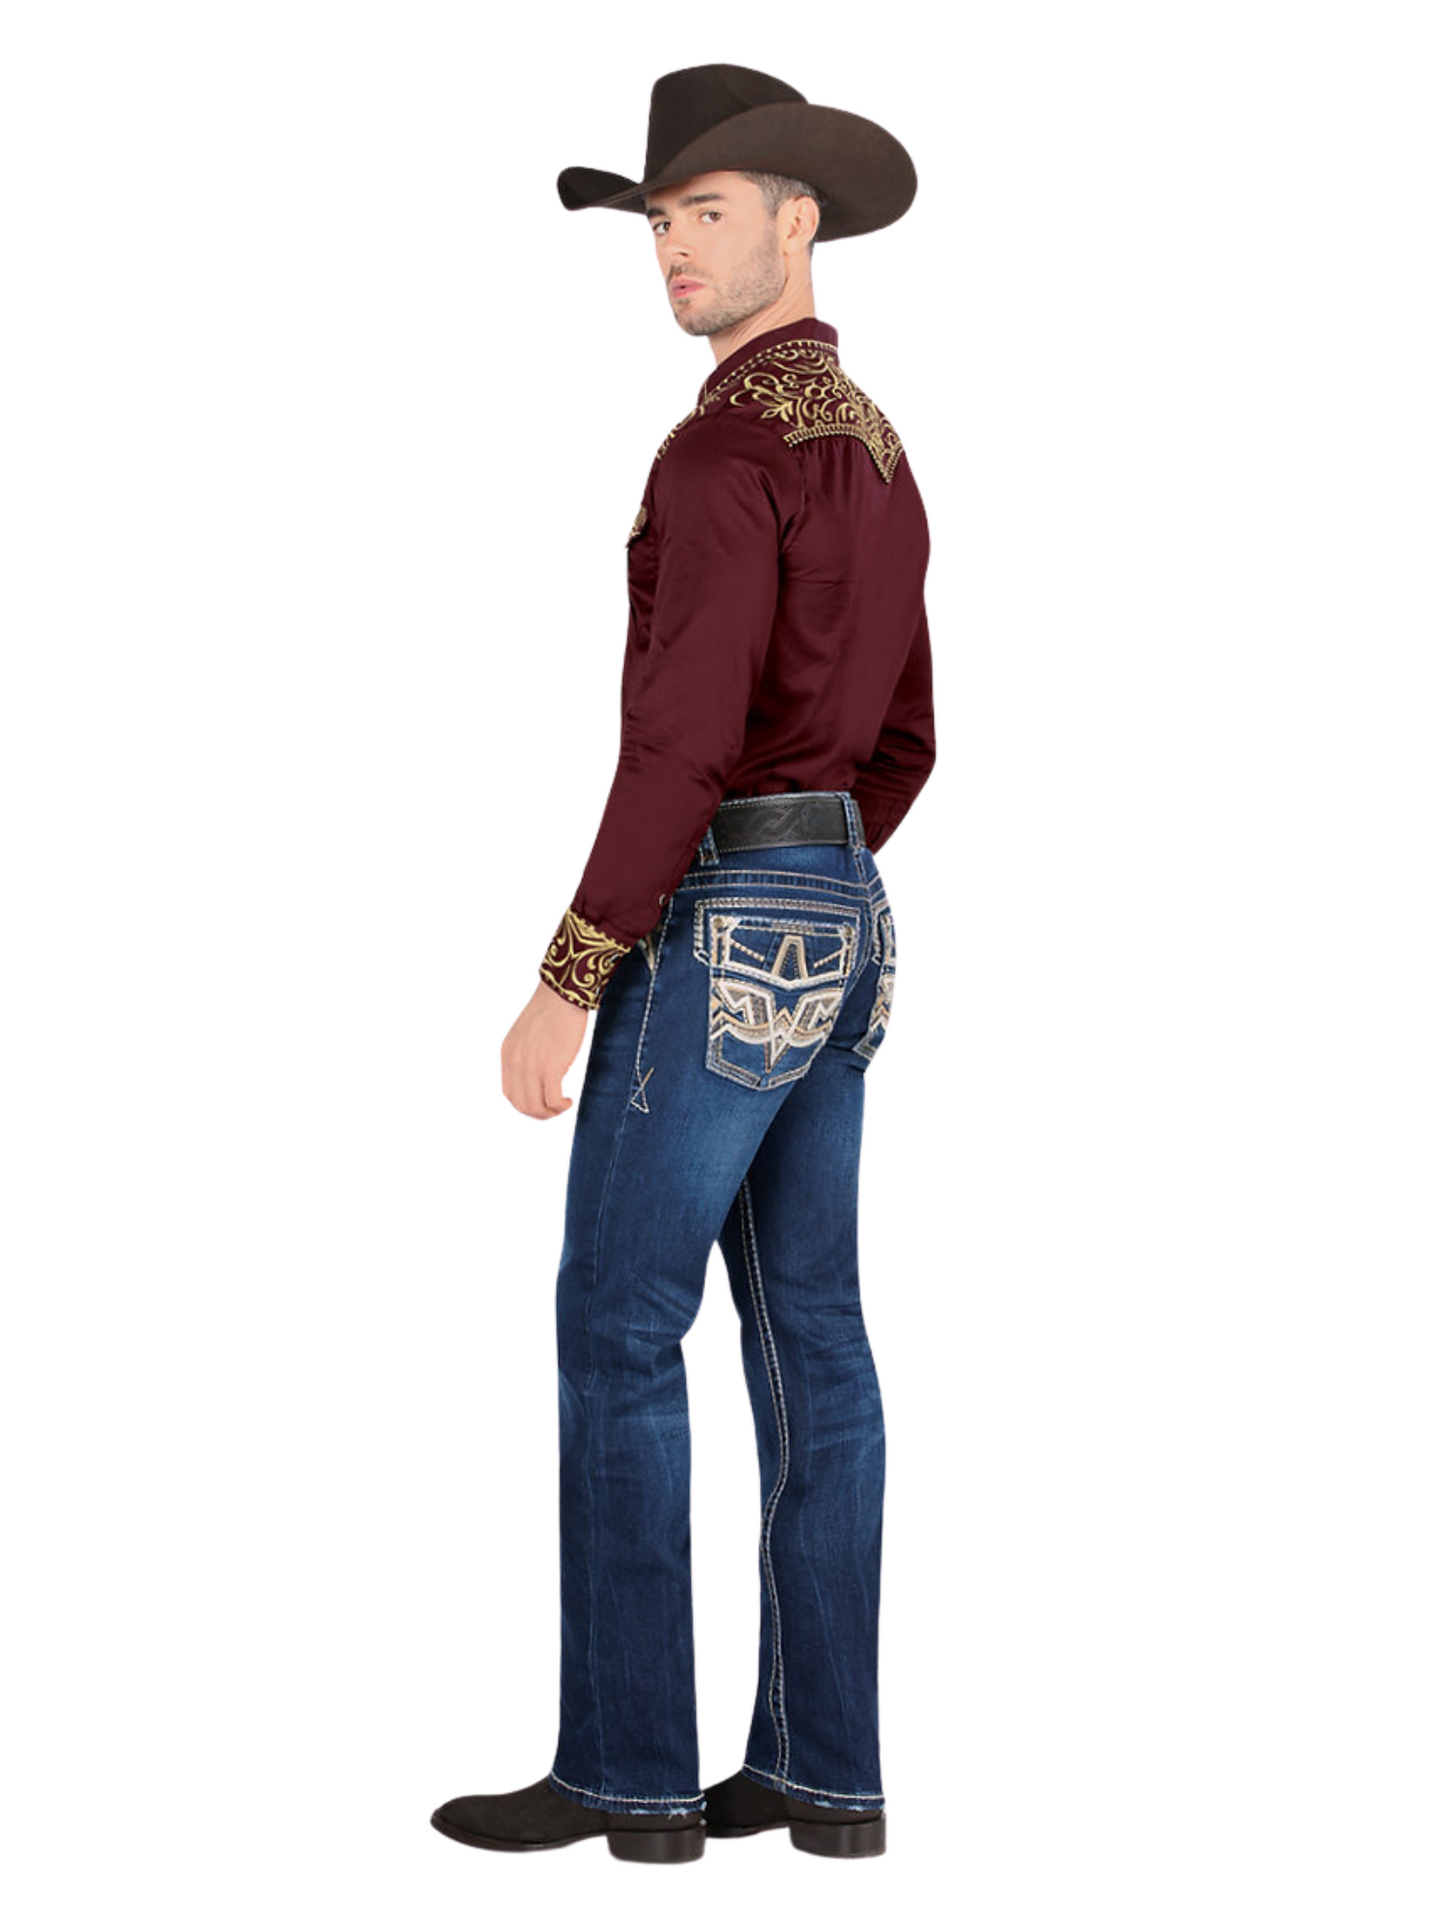 Stretch Denim Jeans for Men 'Montero' - ID: 4593 Denim Jeans Montero